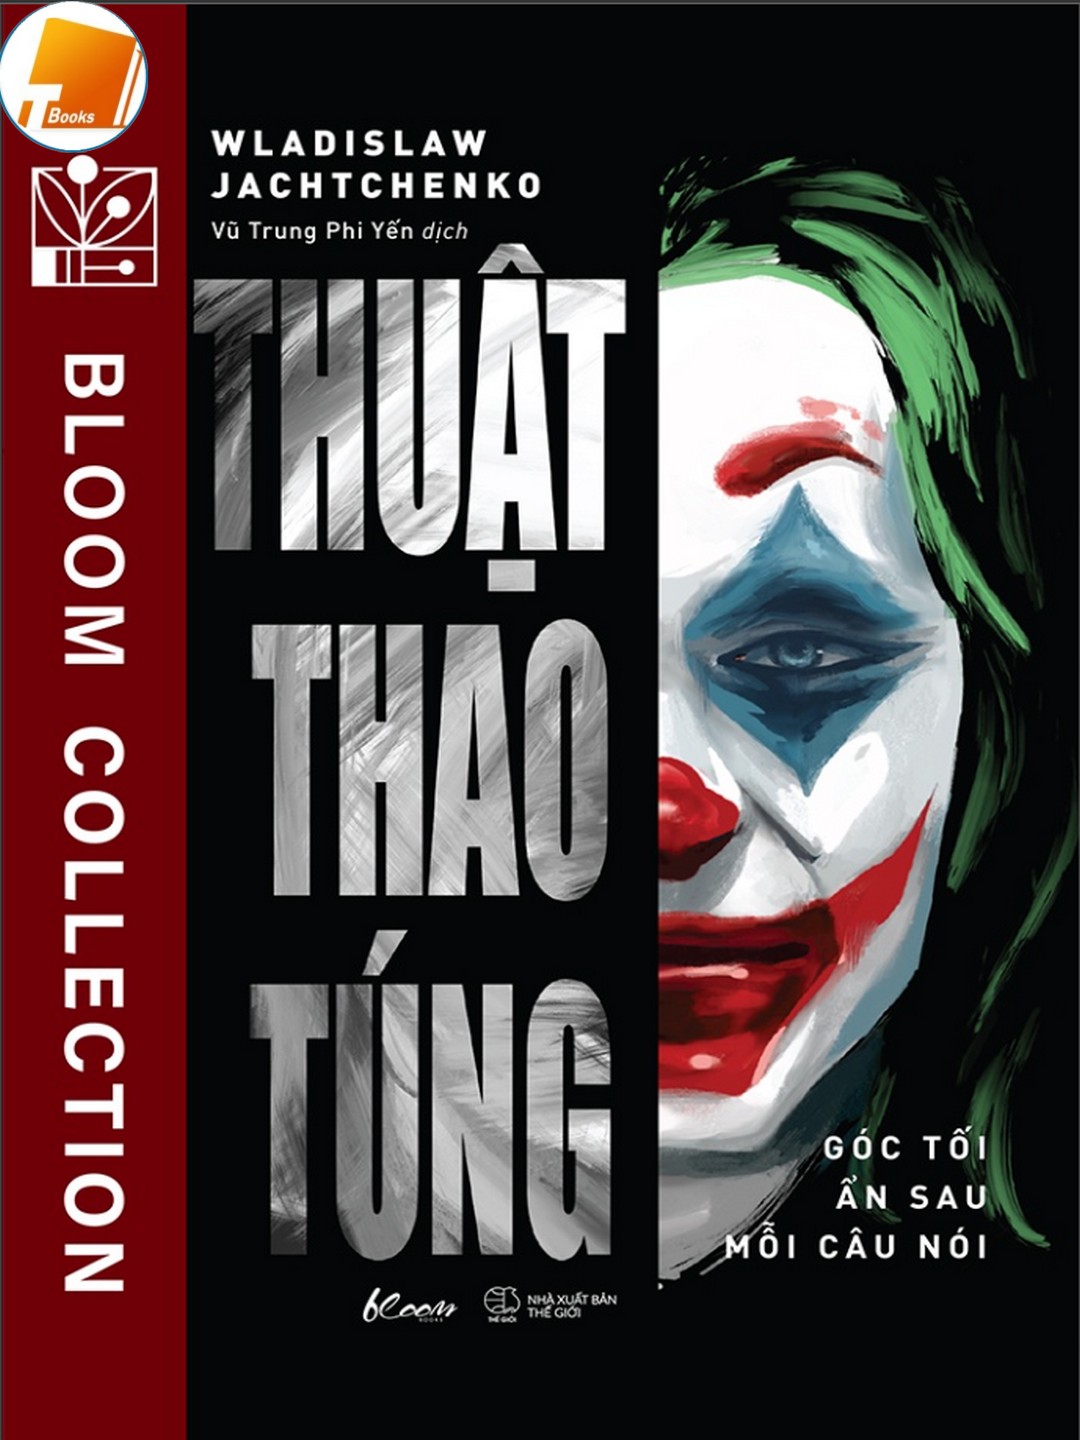 Ebook THUẬT THAO TÚNG: Góc Tối Ẩn Sau Mỗi Câu Nói – Wladislaw Jachtchenko PDF